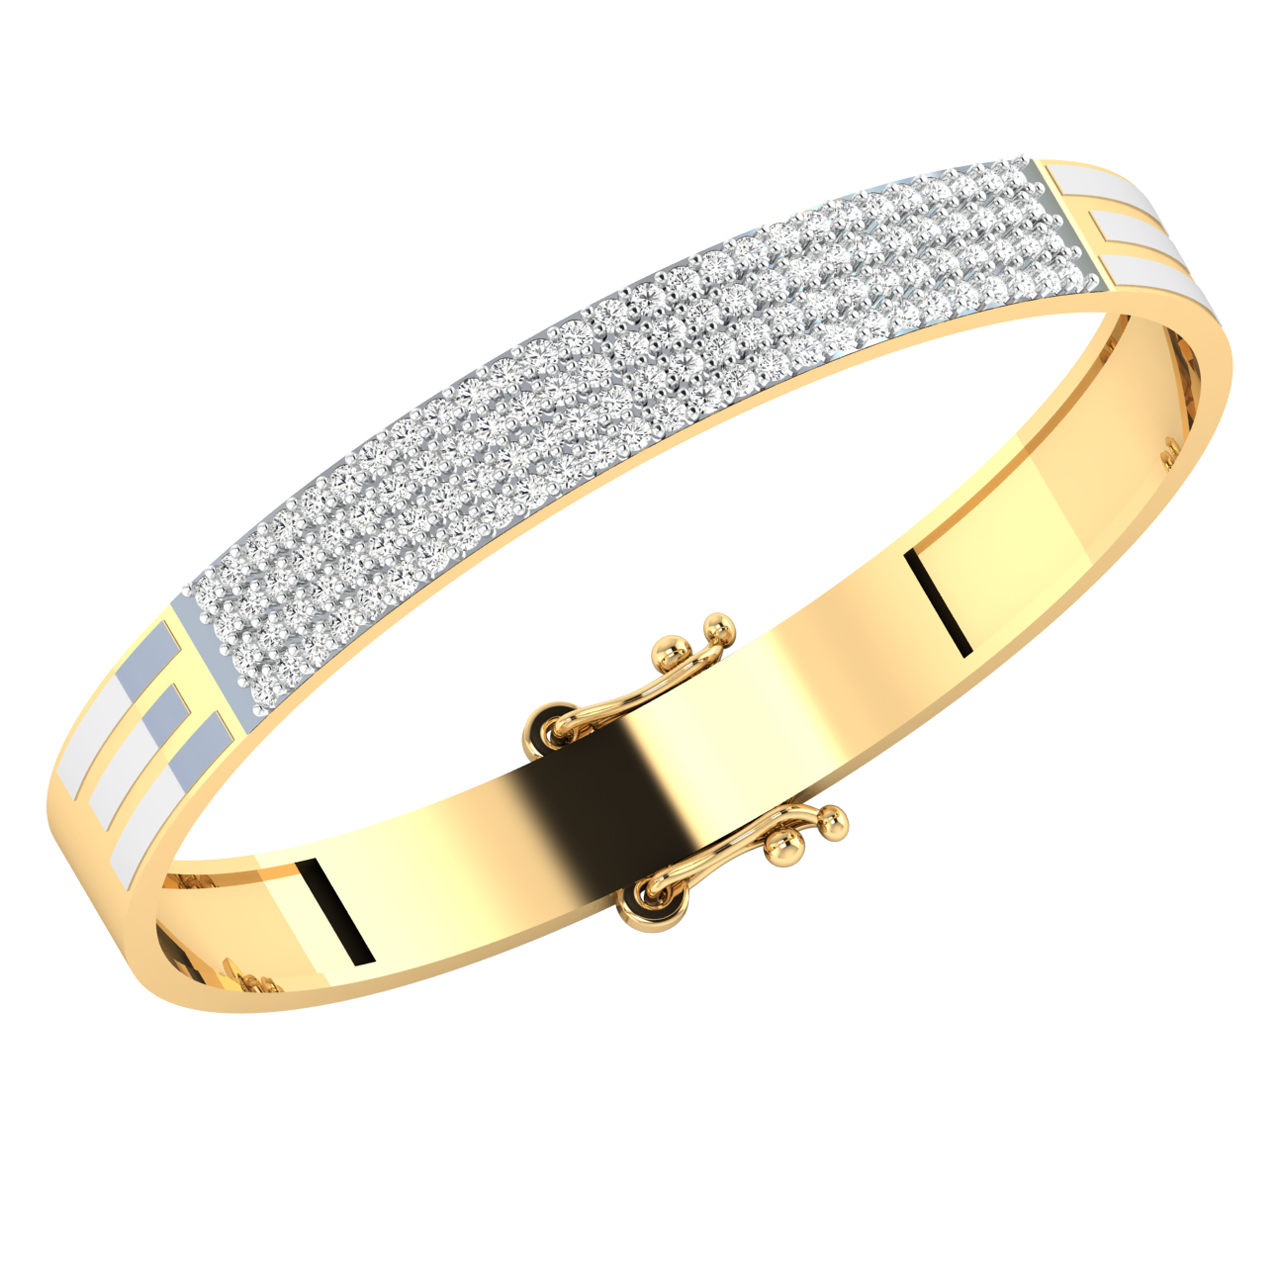 Buy Latest Bracelet Online - RK Jewellers